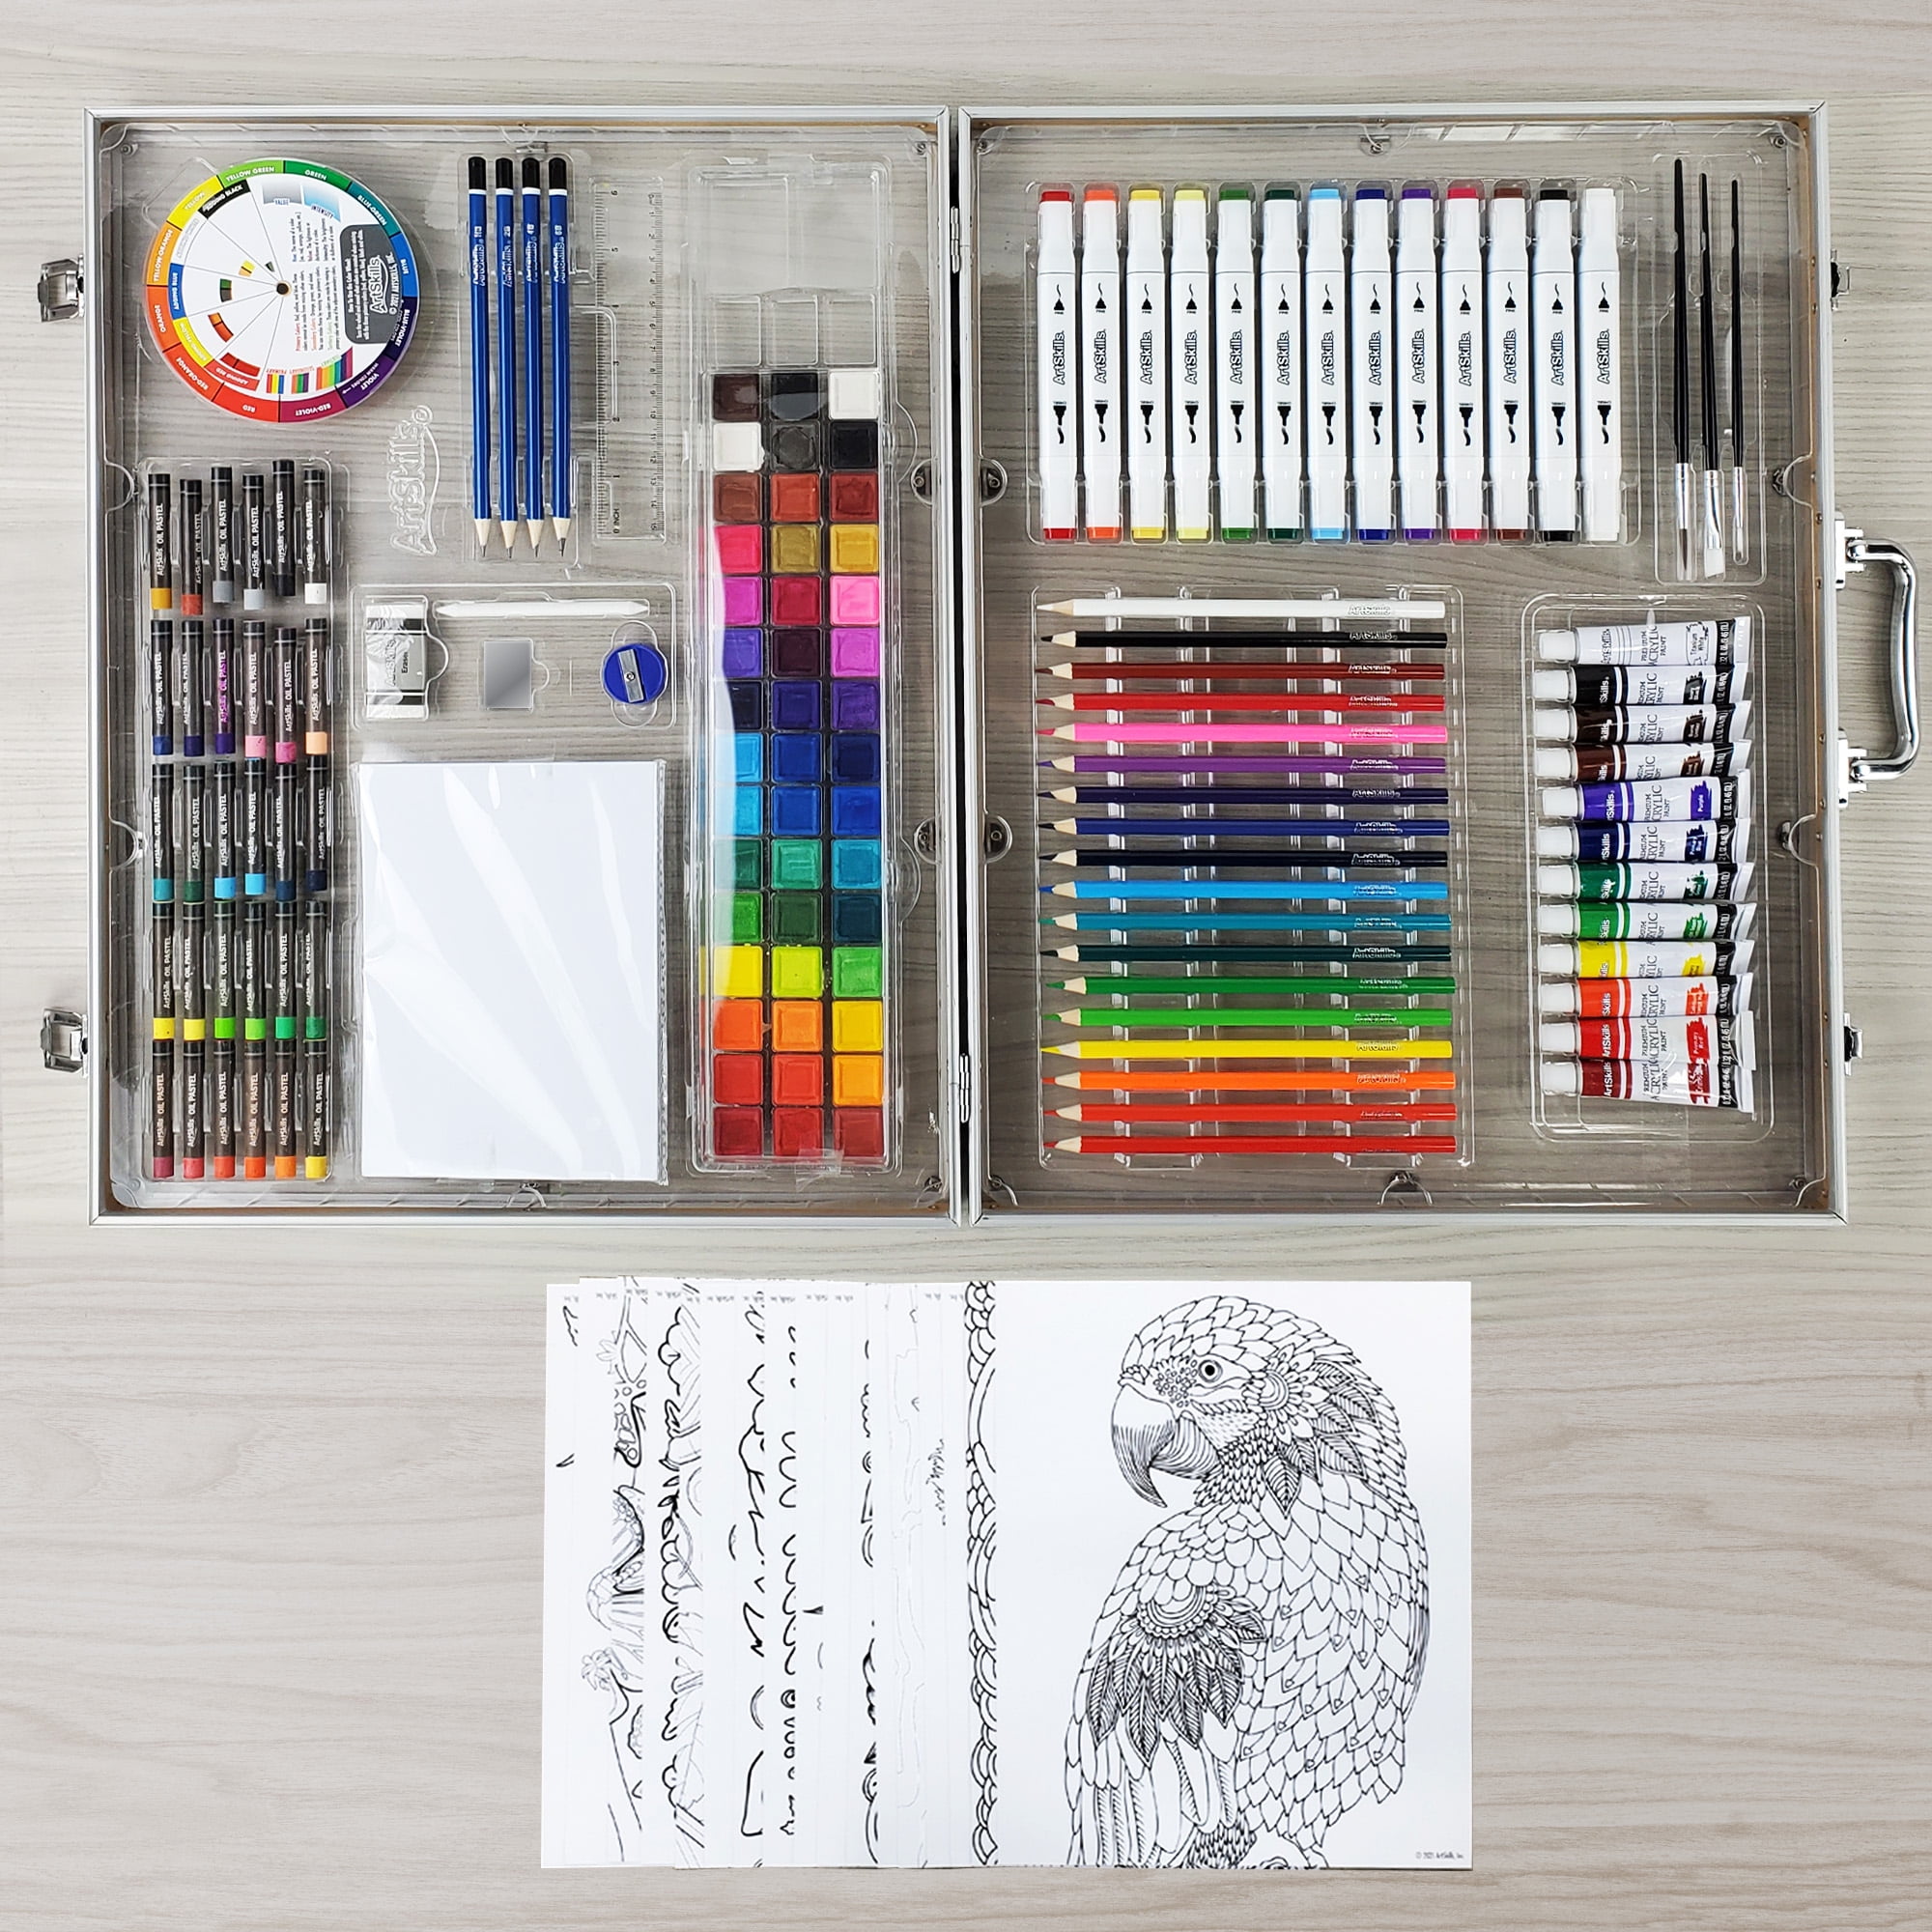 ArtSkills Assorted Premium Sketching and Drawing Kit, 39 Pieces - Sam's Club